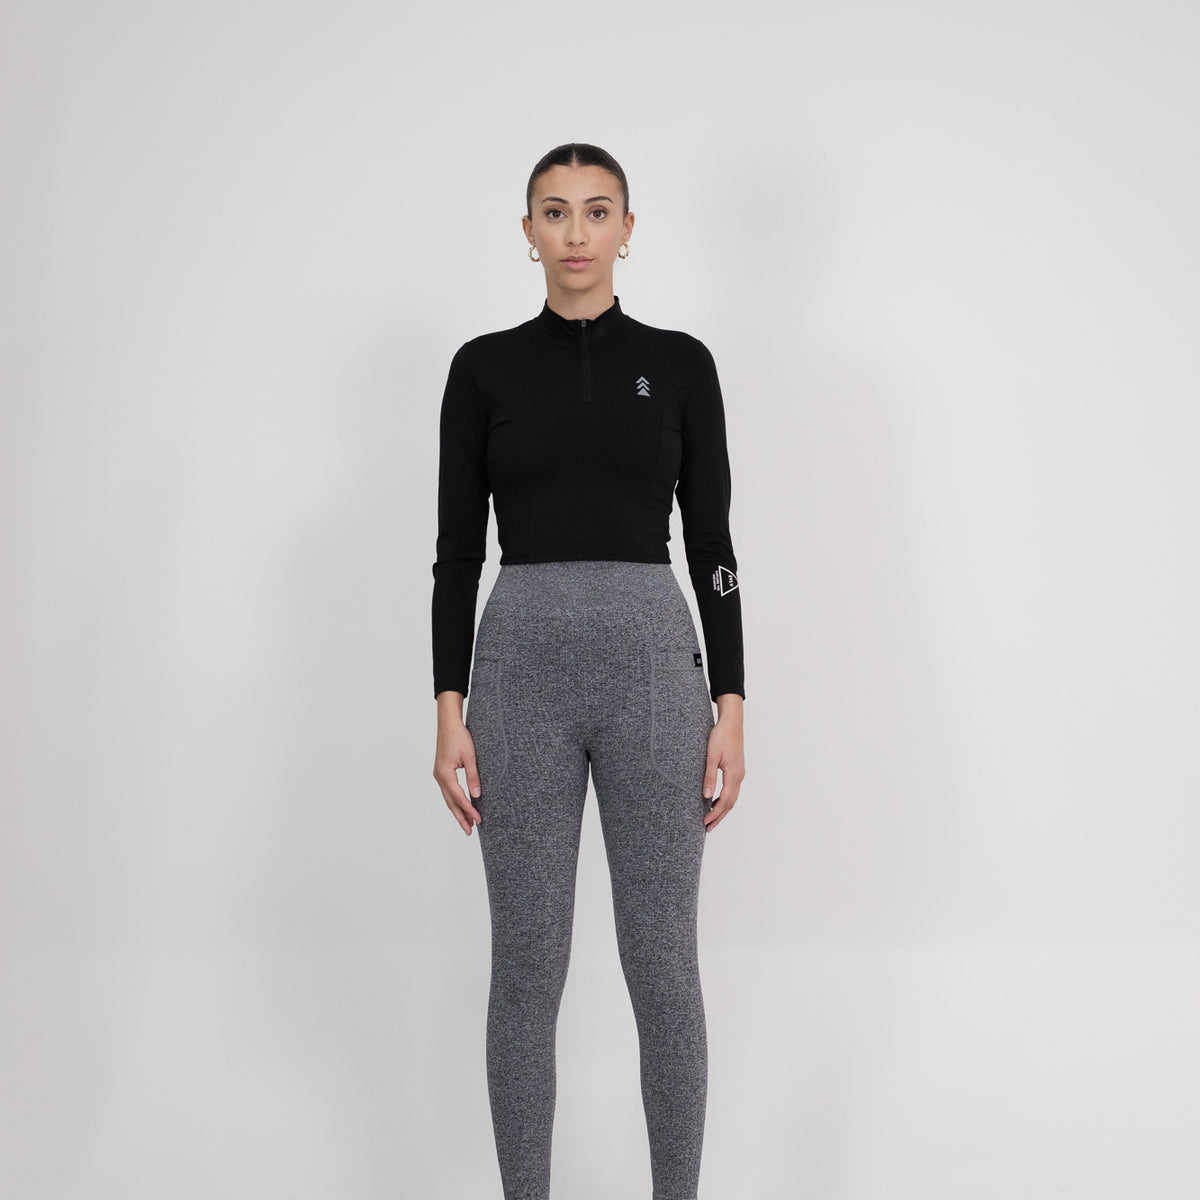 Legging Storm Grey  RectoVerso premium activewear for women